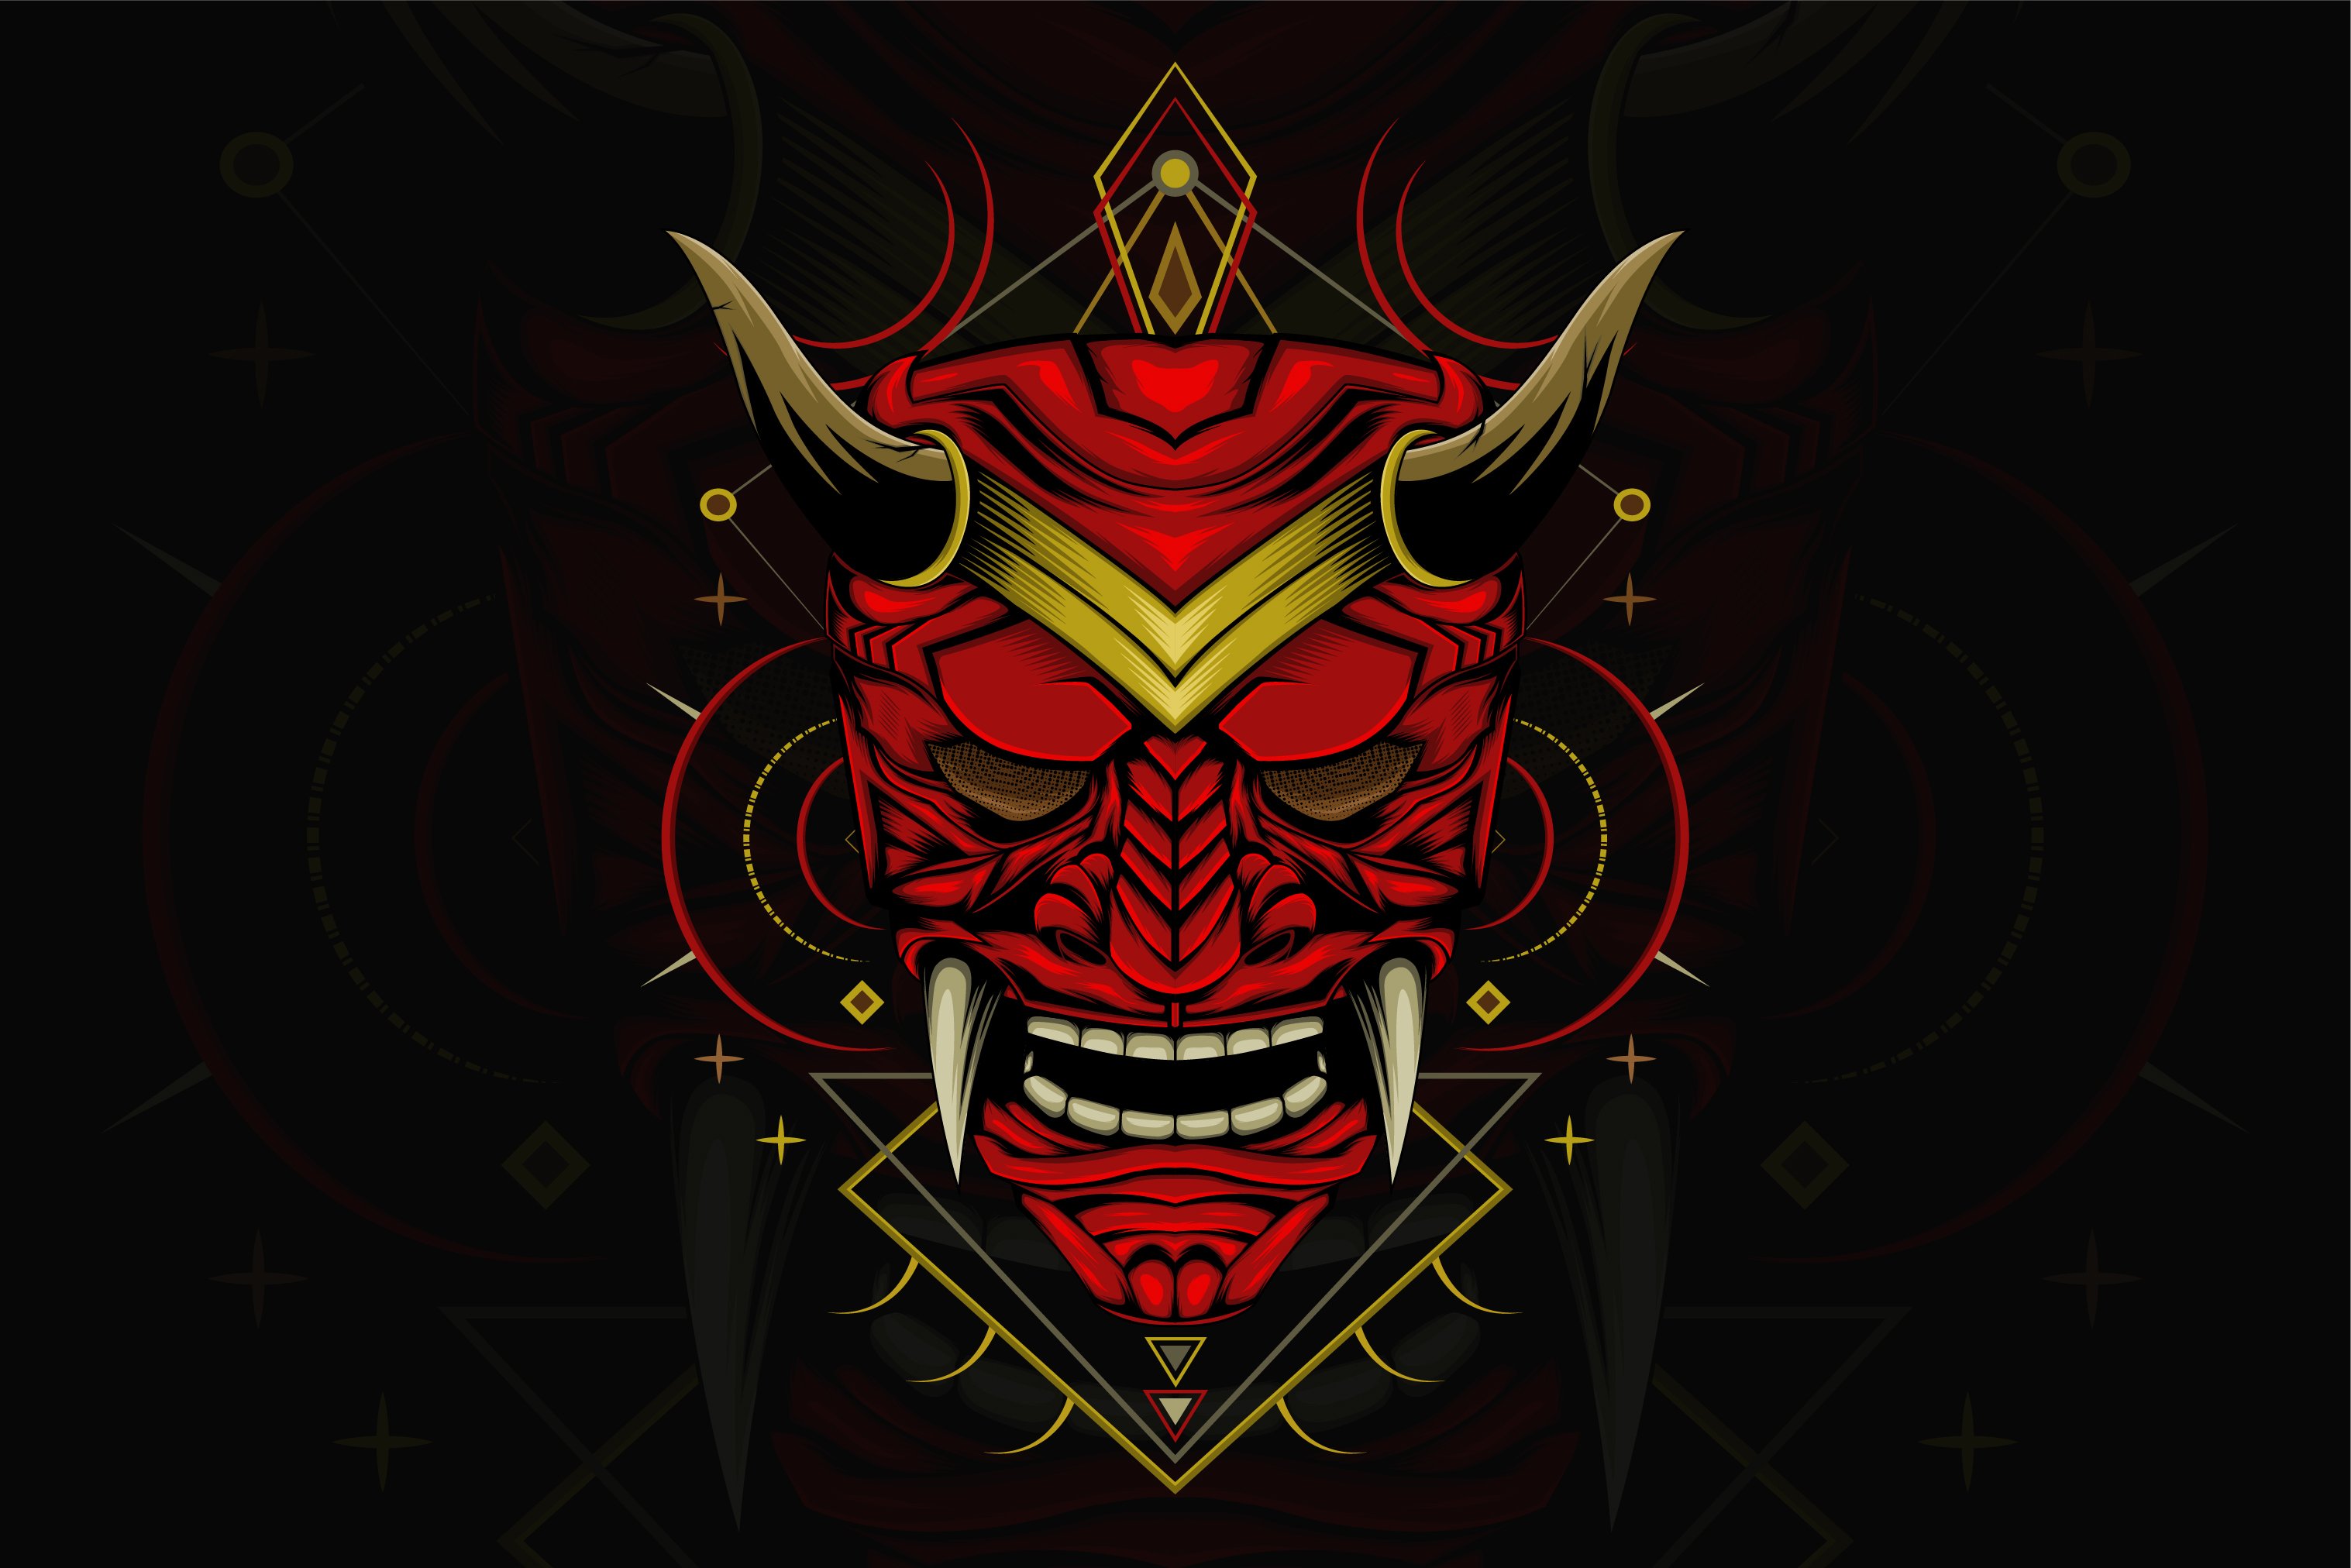 Samurai mask preview image.